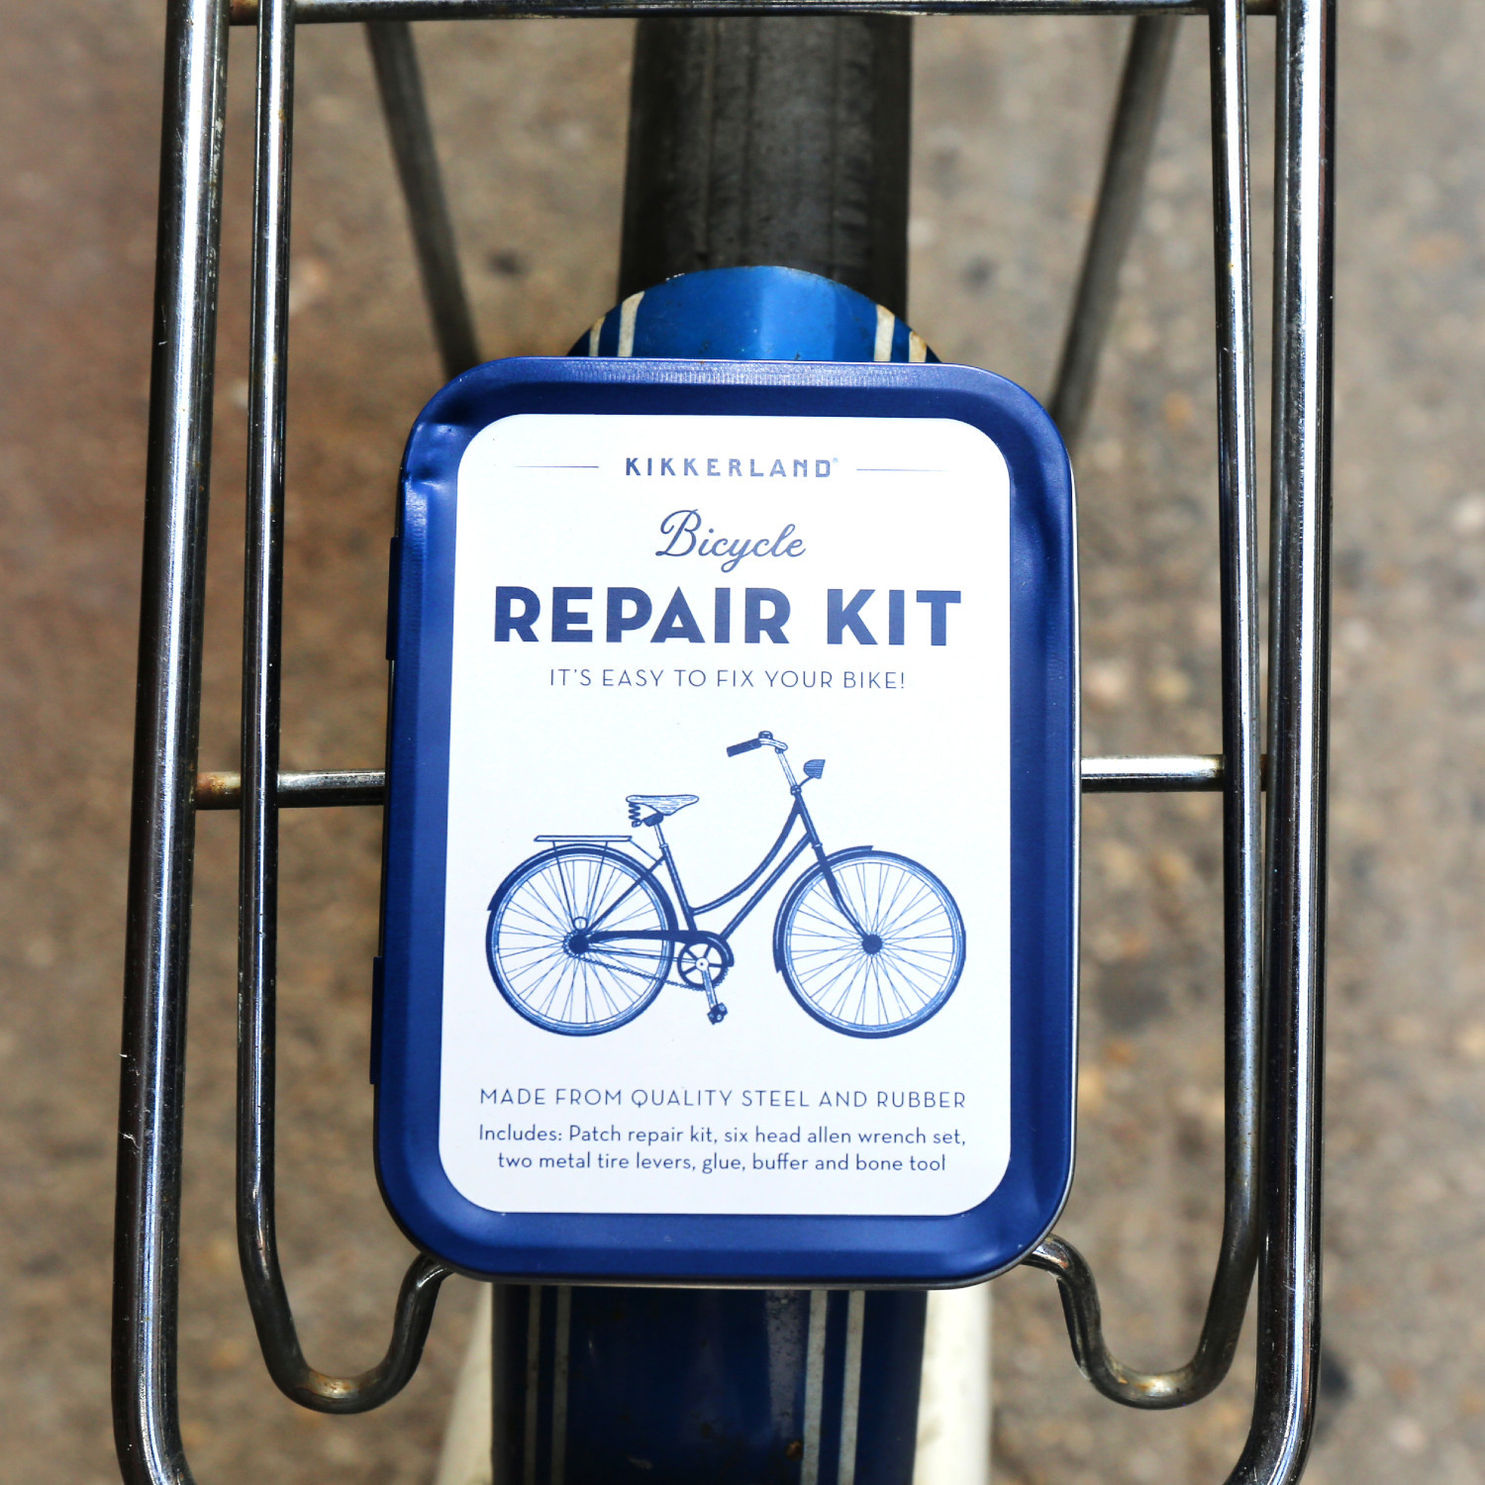 Fahrrad Reparatur-Set jetzt bei Weltbild.de bestellen